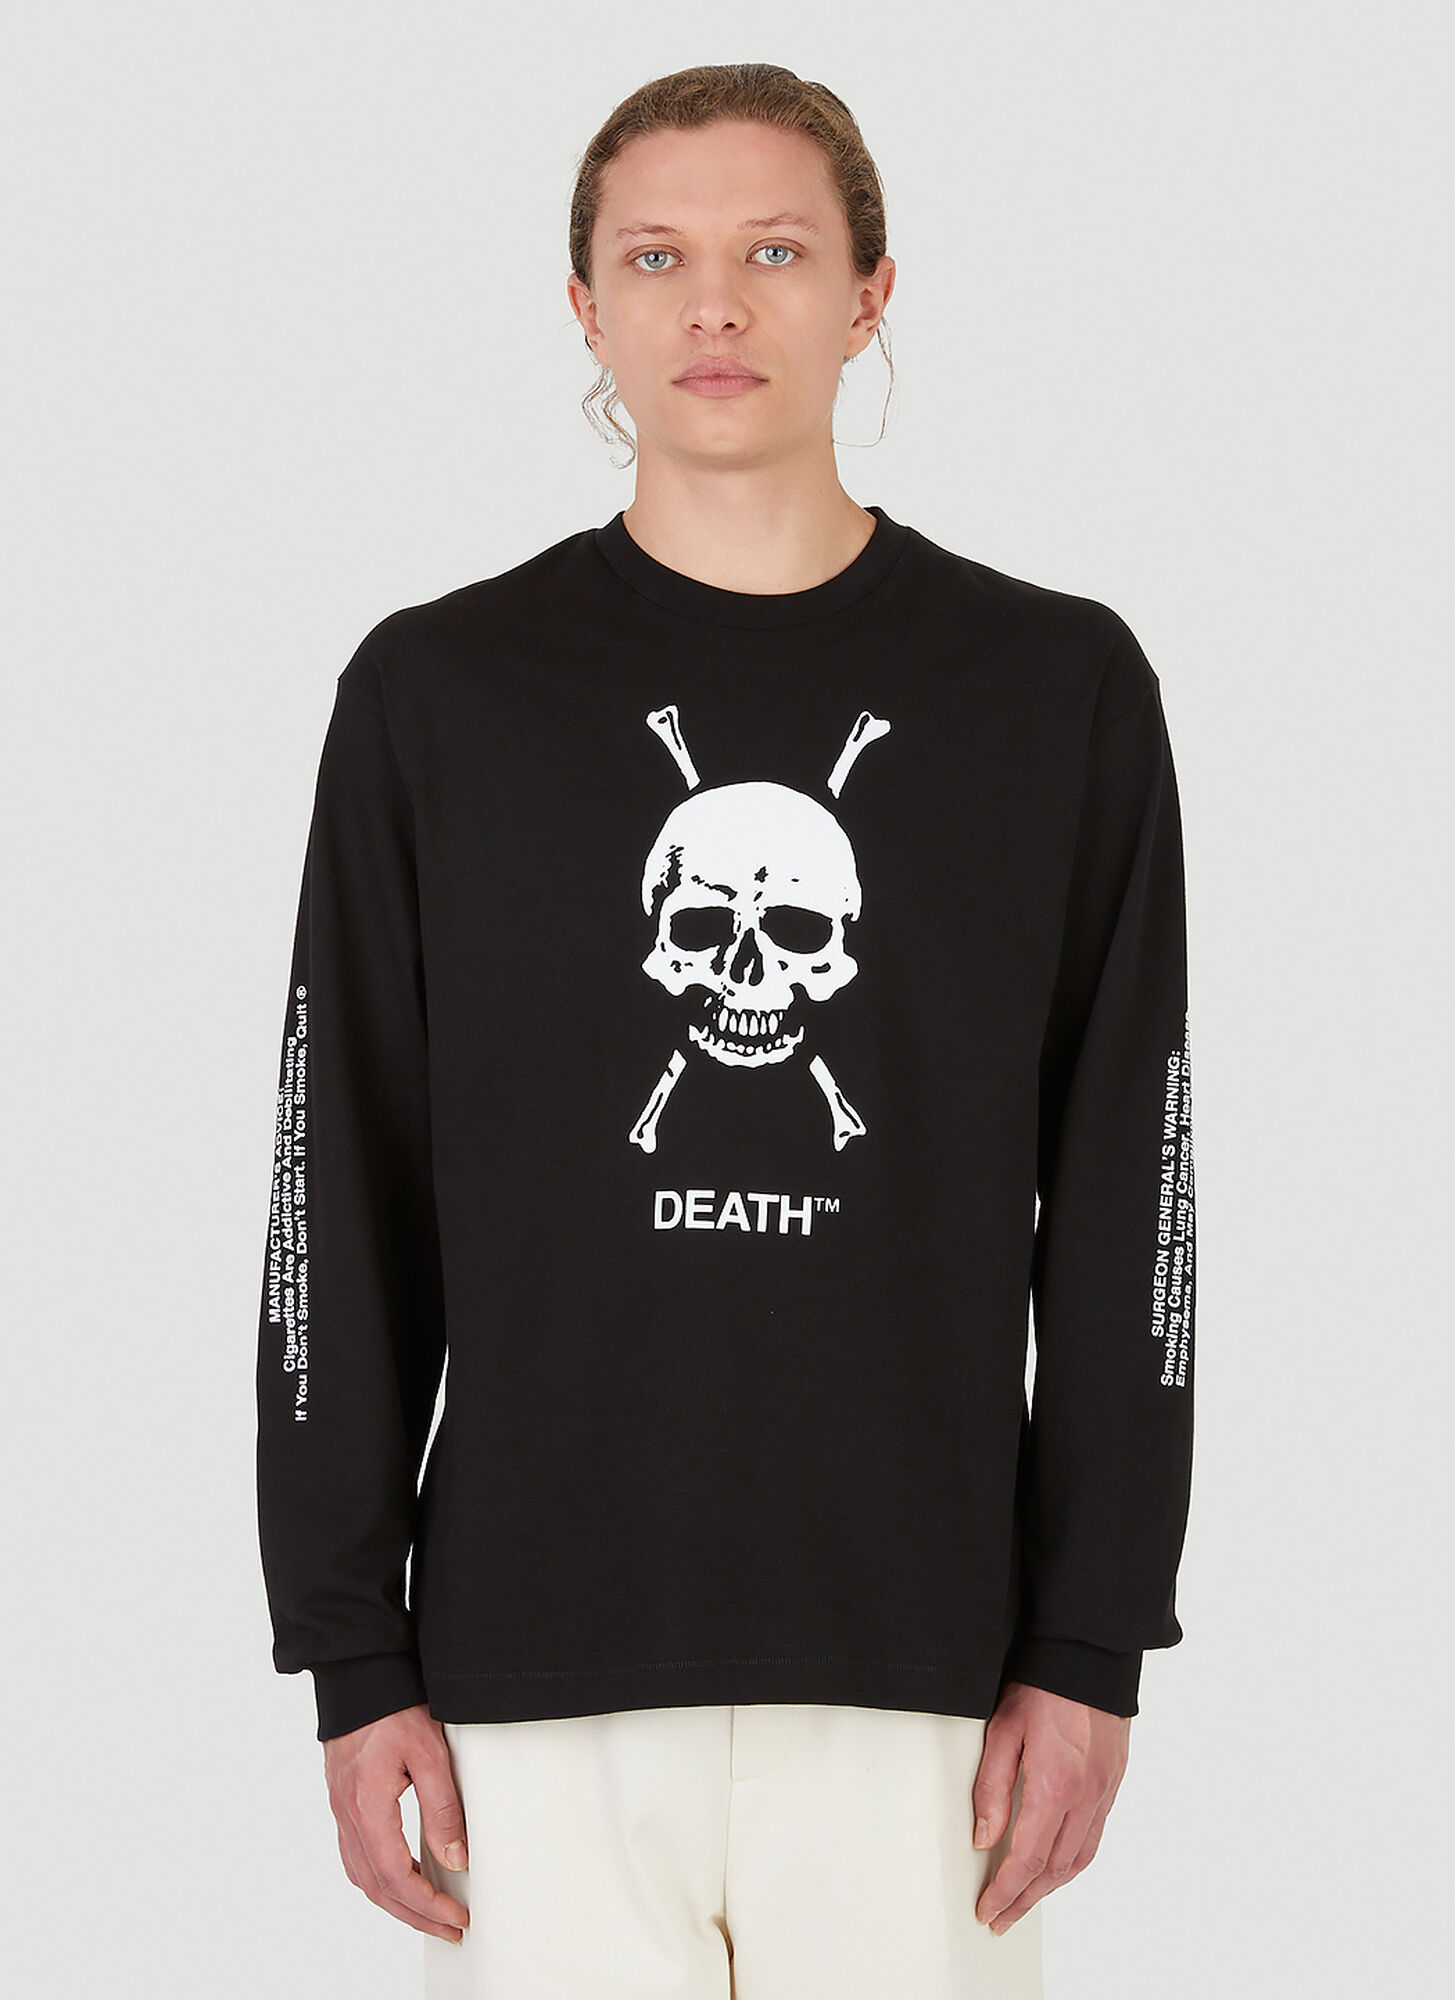 Death Cigarettes Death Sweatshirt Male Black